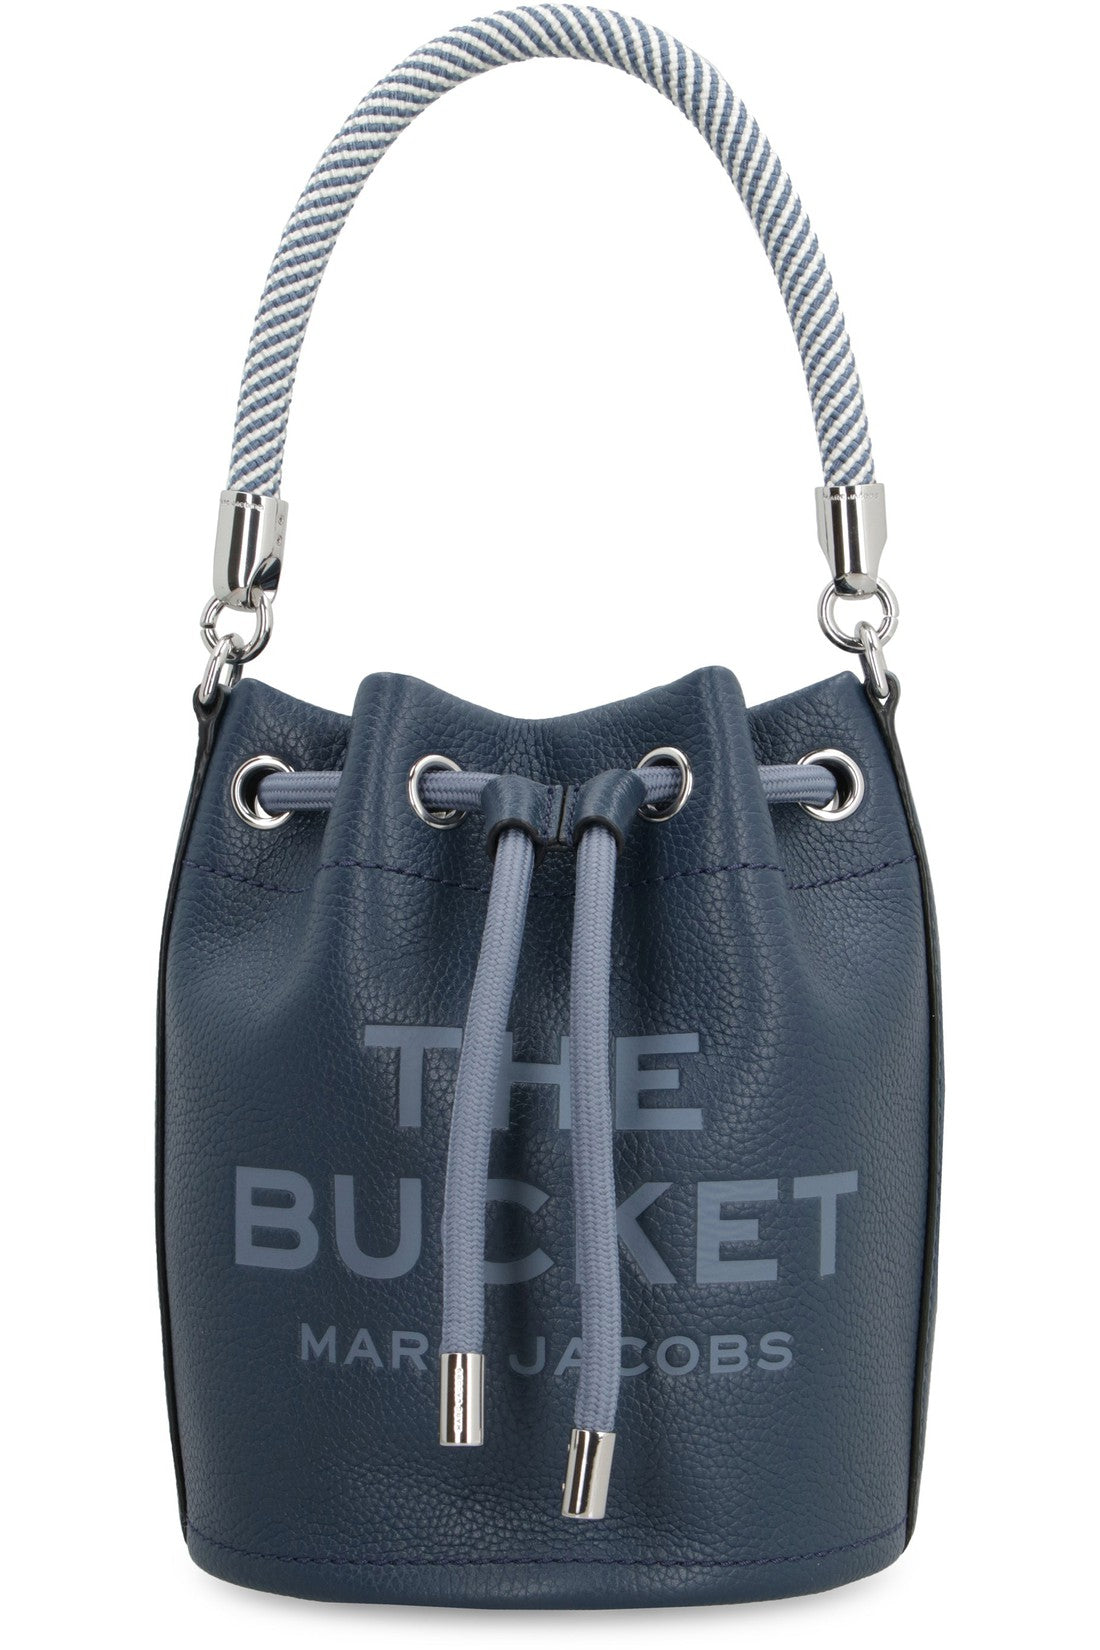 Marc Jacobs-OUTLET-SALE-The Leather Bucket Bag-ARCHIVIST